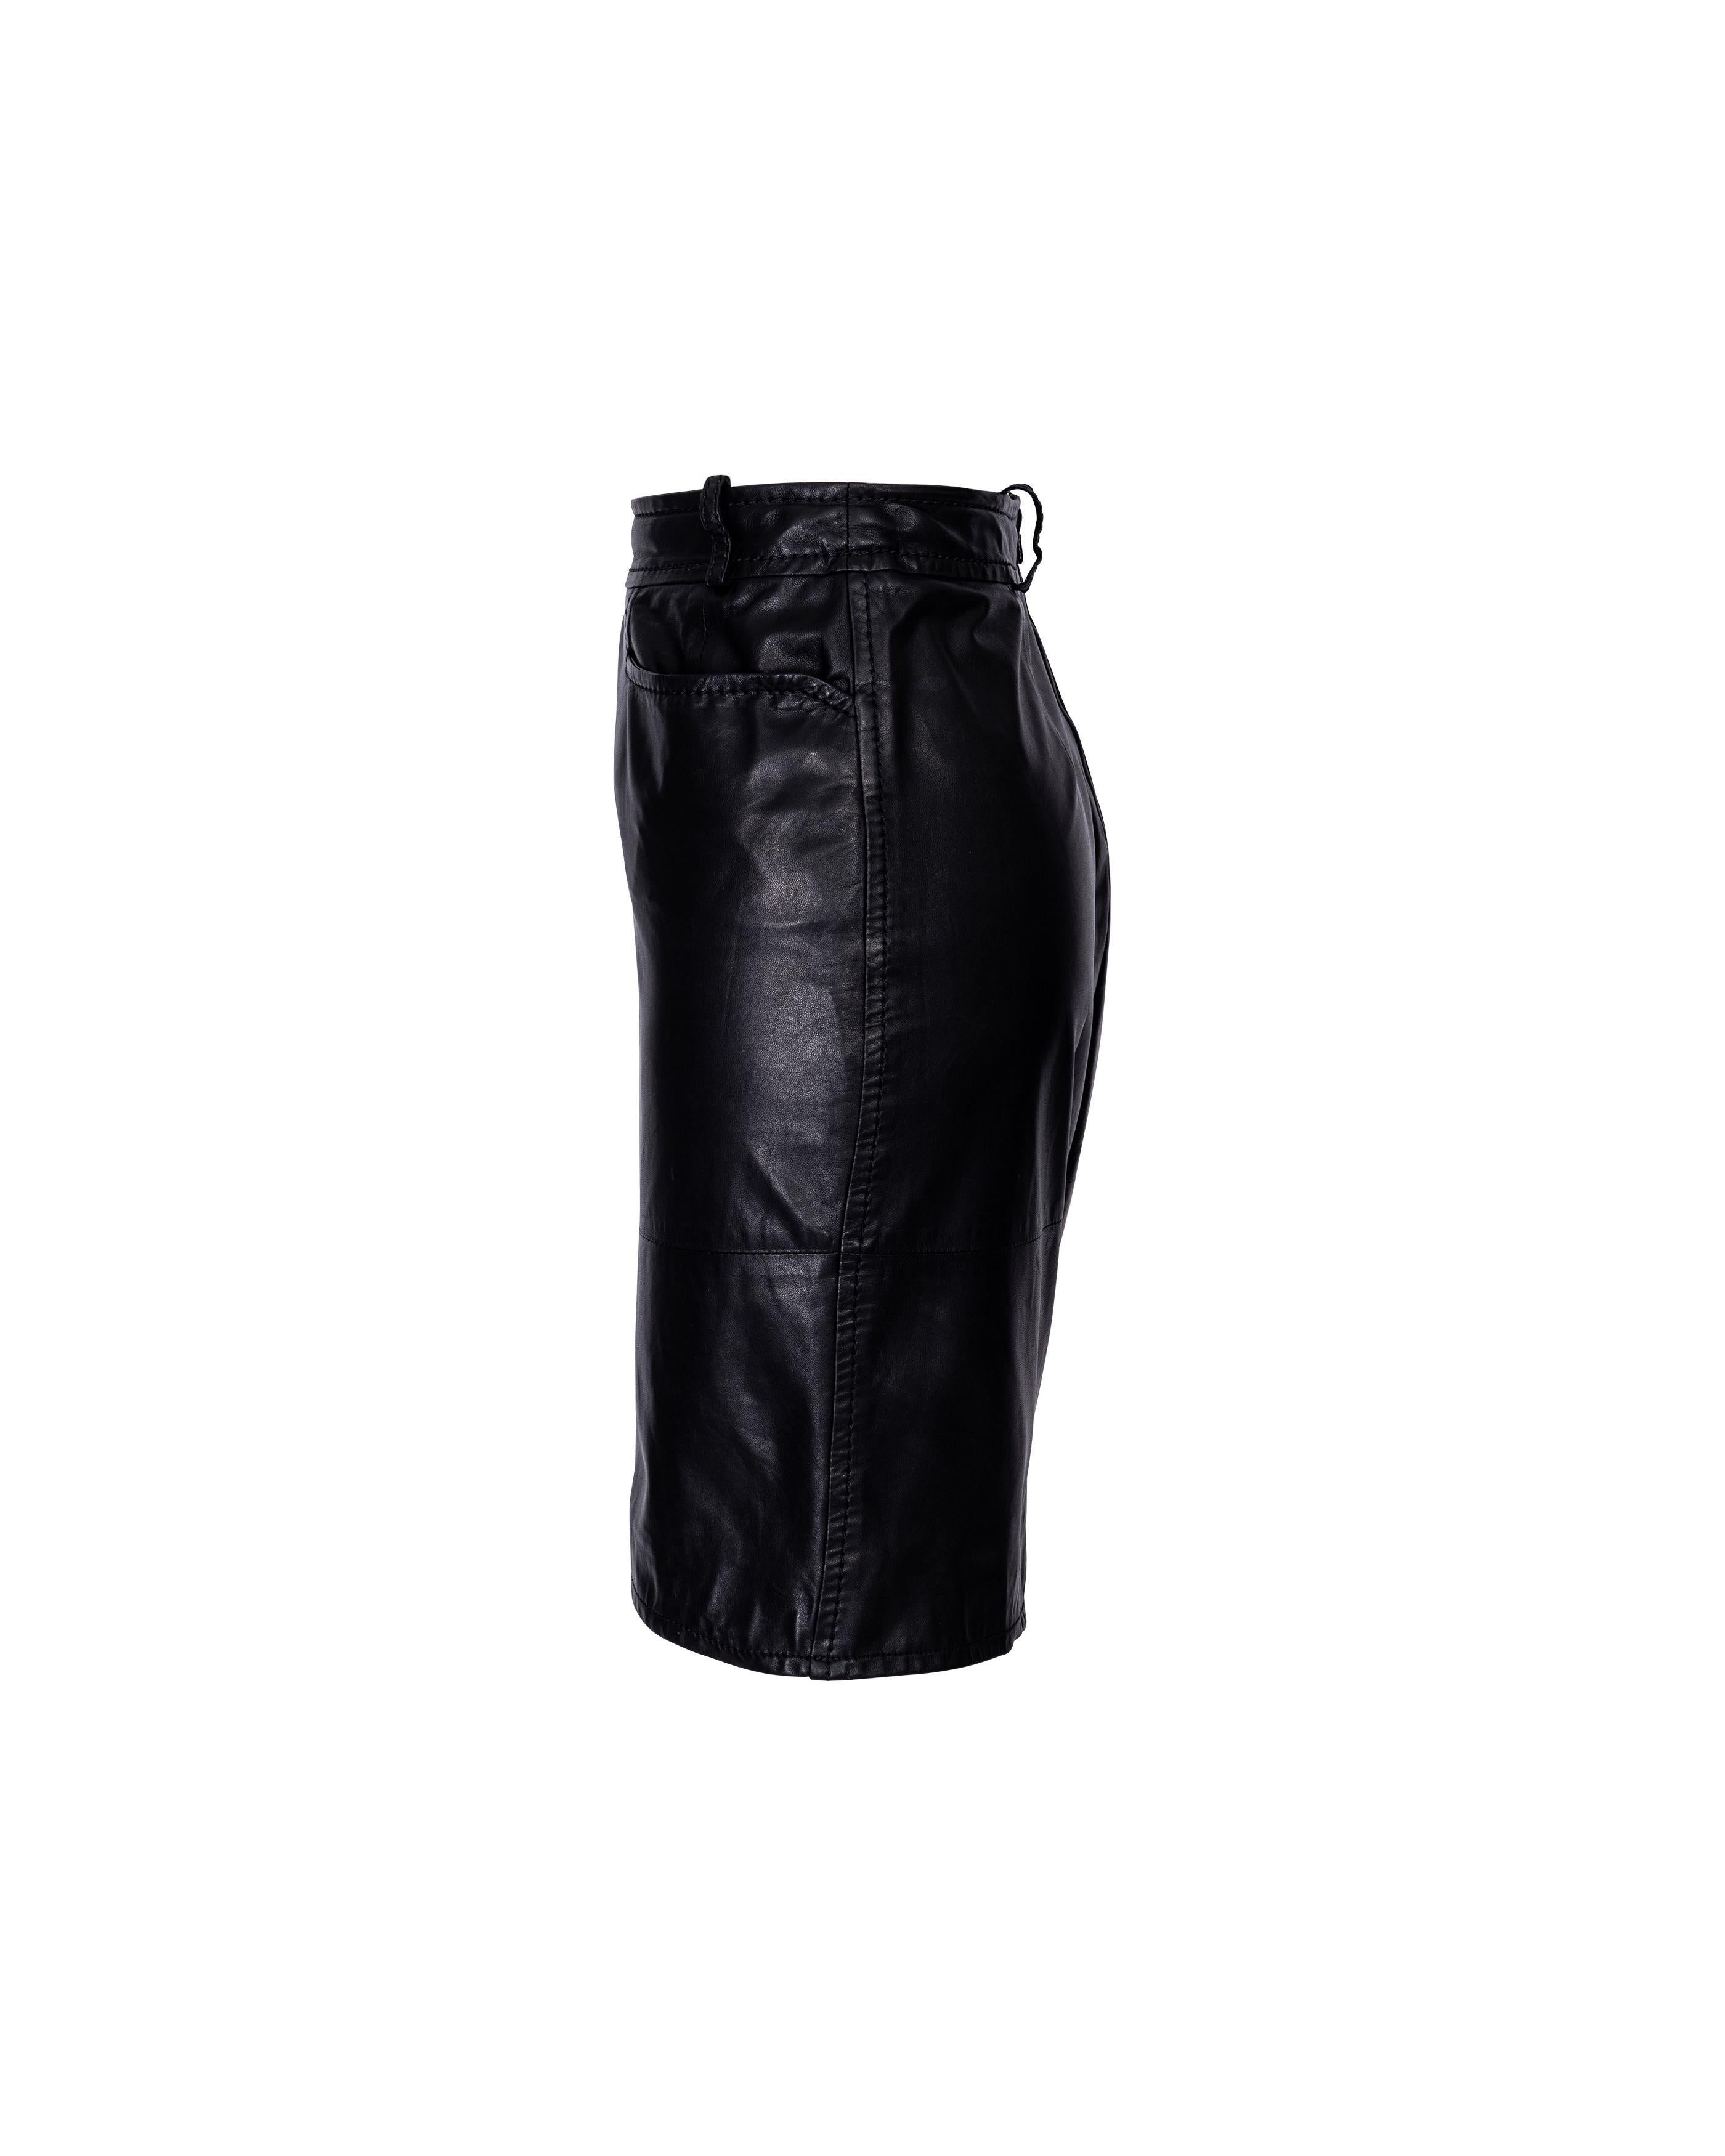 A/W 2005 Christian Dior by John Galliano Black Leather Skirt Set 4